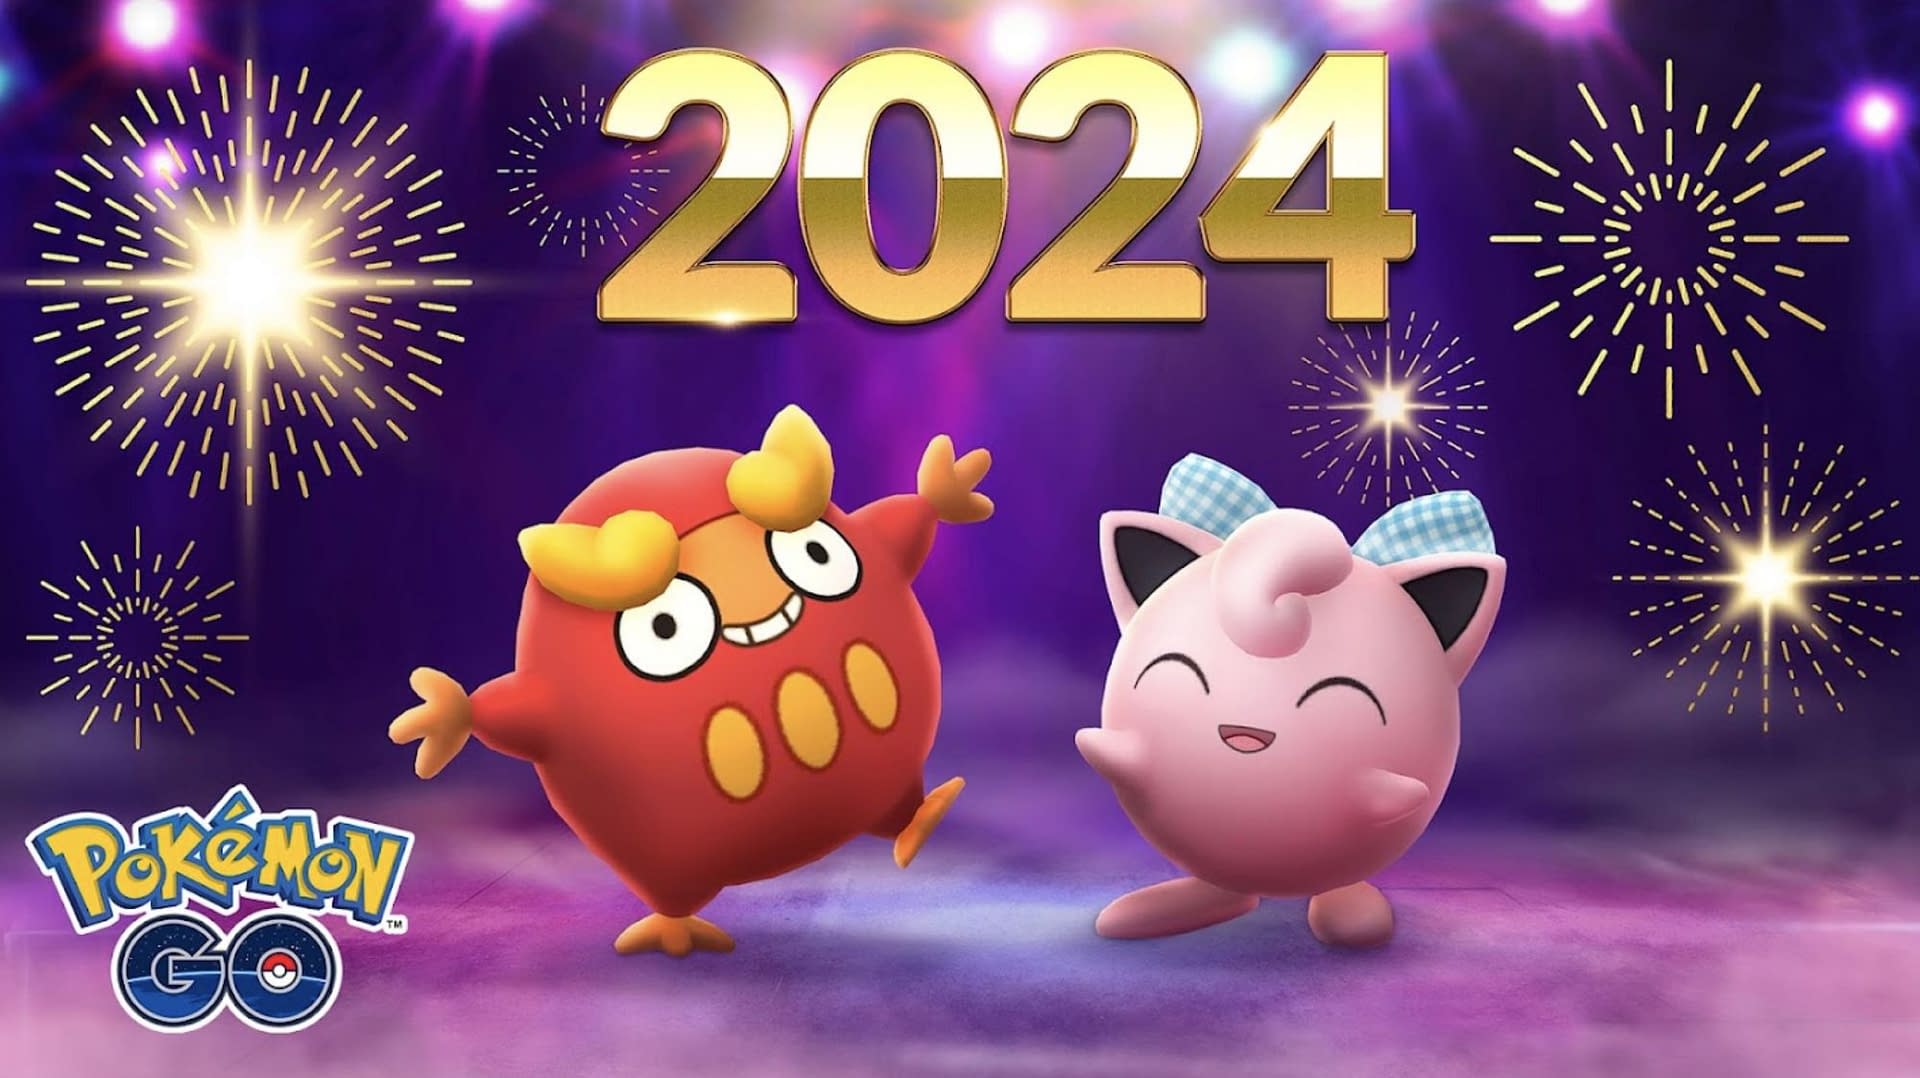 The New Year’s 2024 Kicks Off Today In Pokémon GO